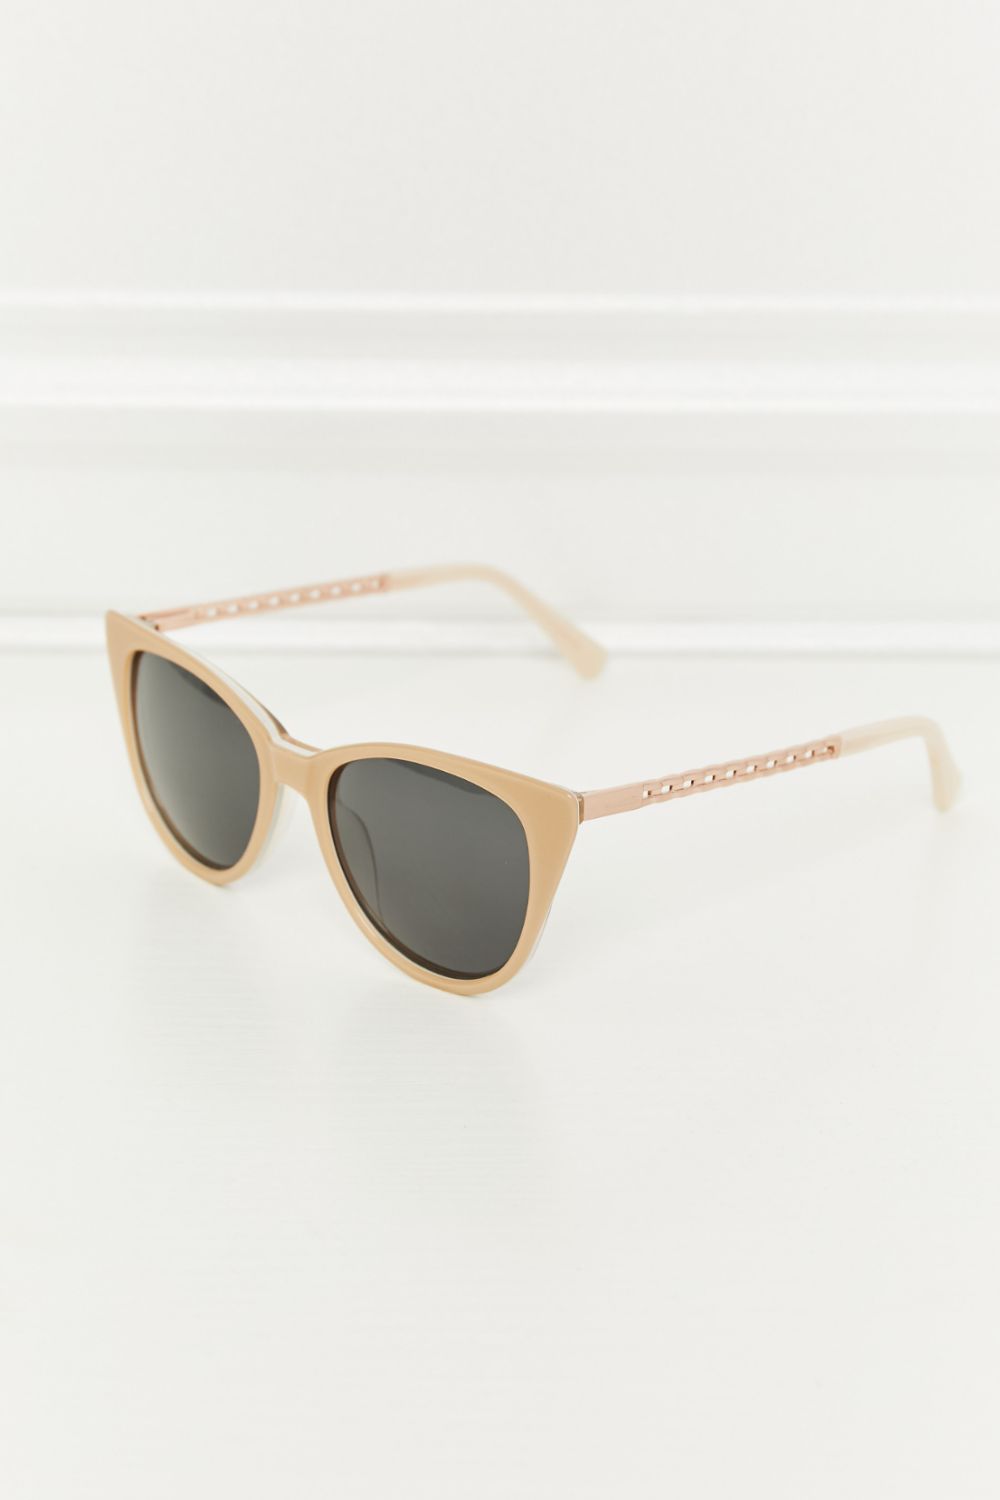 Cat-Eye Acetate Frame Sunglasses Mocha One Size Sunglasses by Vim&Vigor | Vim&Vigor Boutique